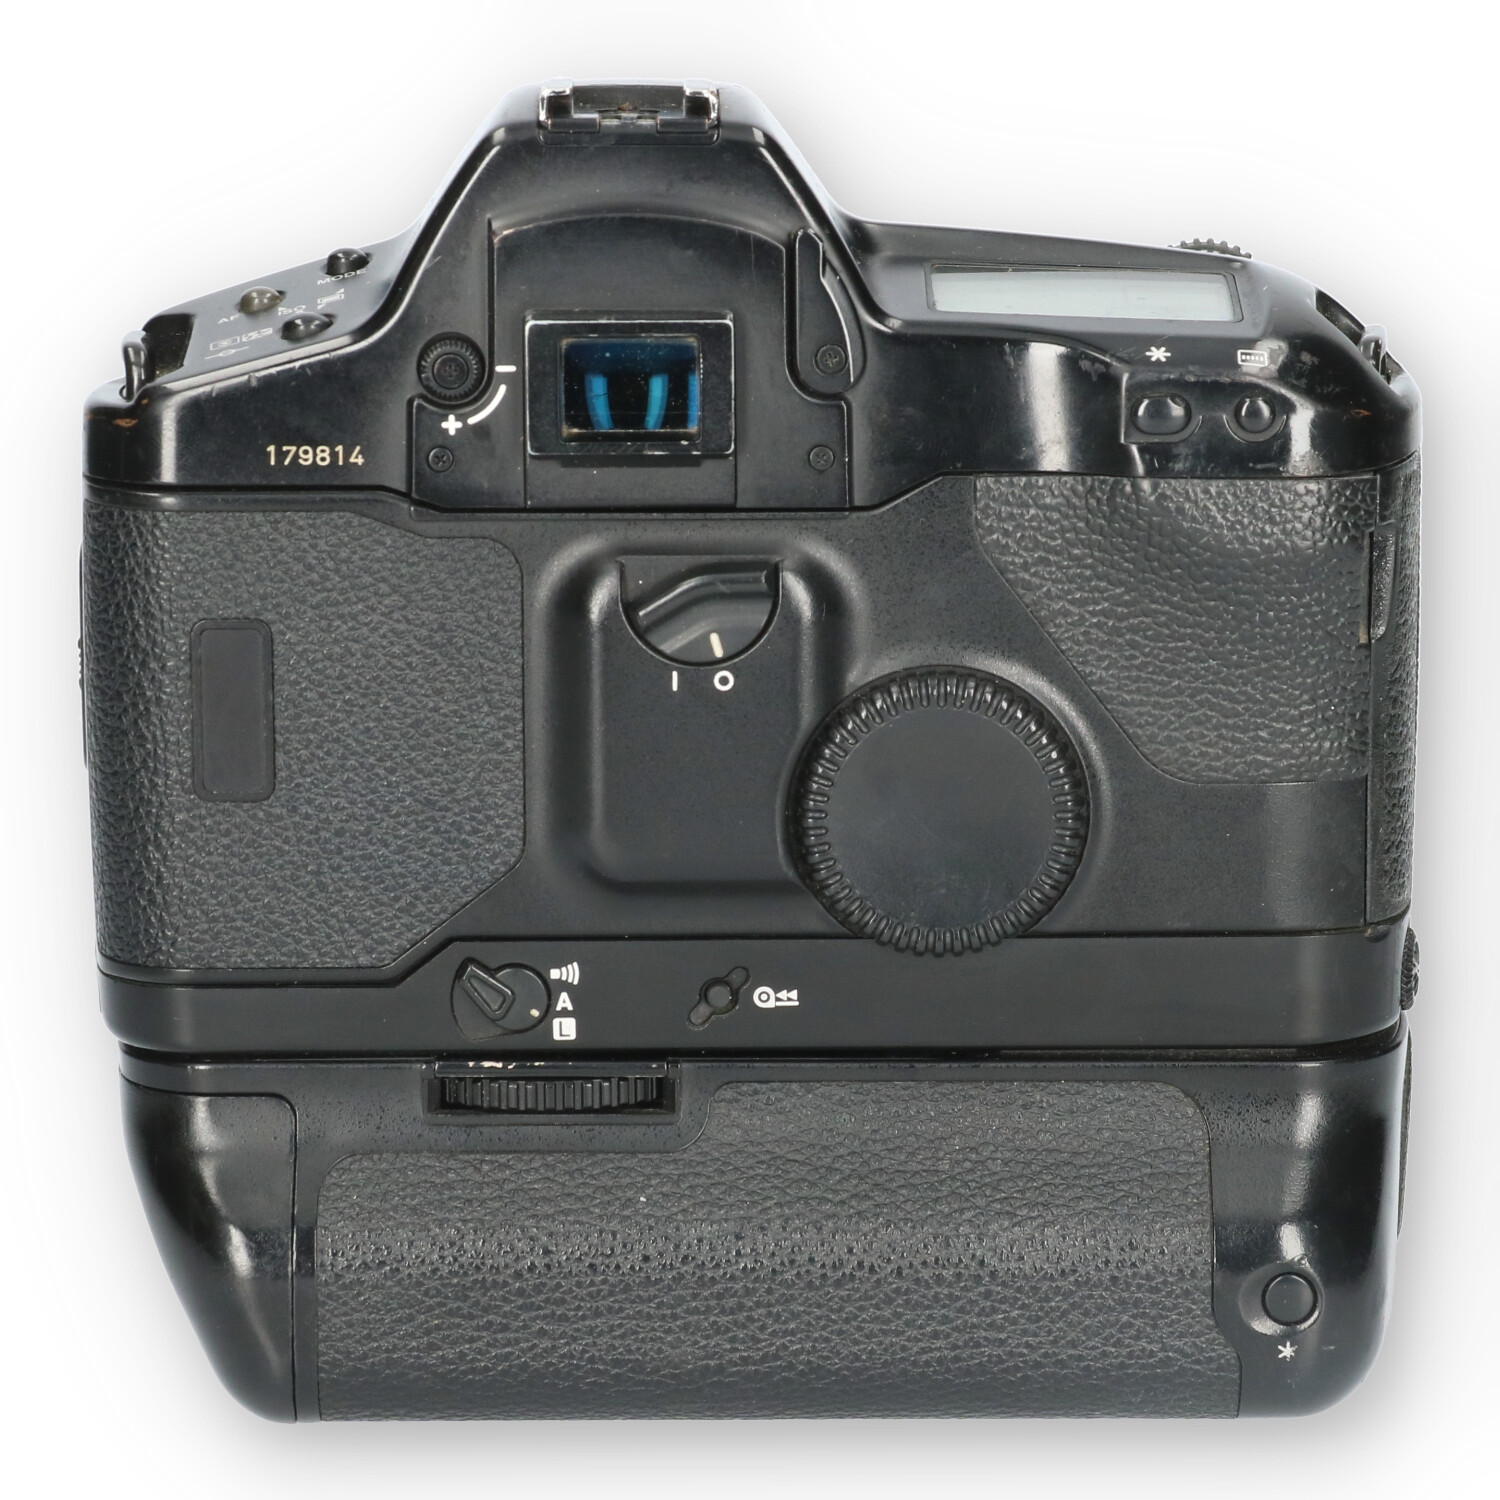 Canon EOS 1N - Booster E1 - No-Digital